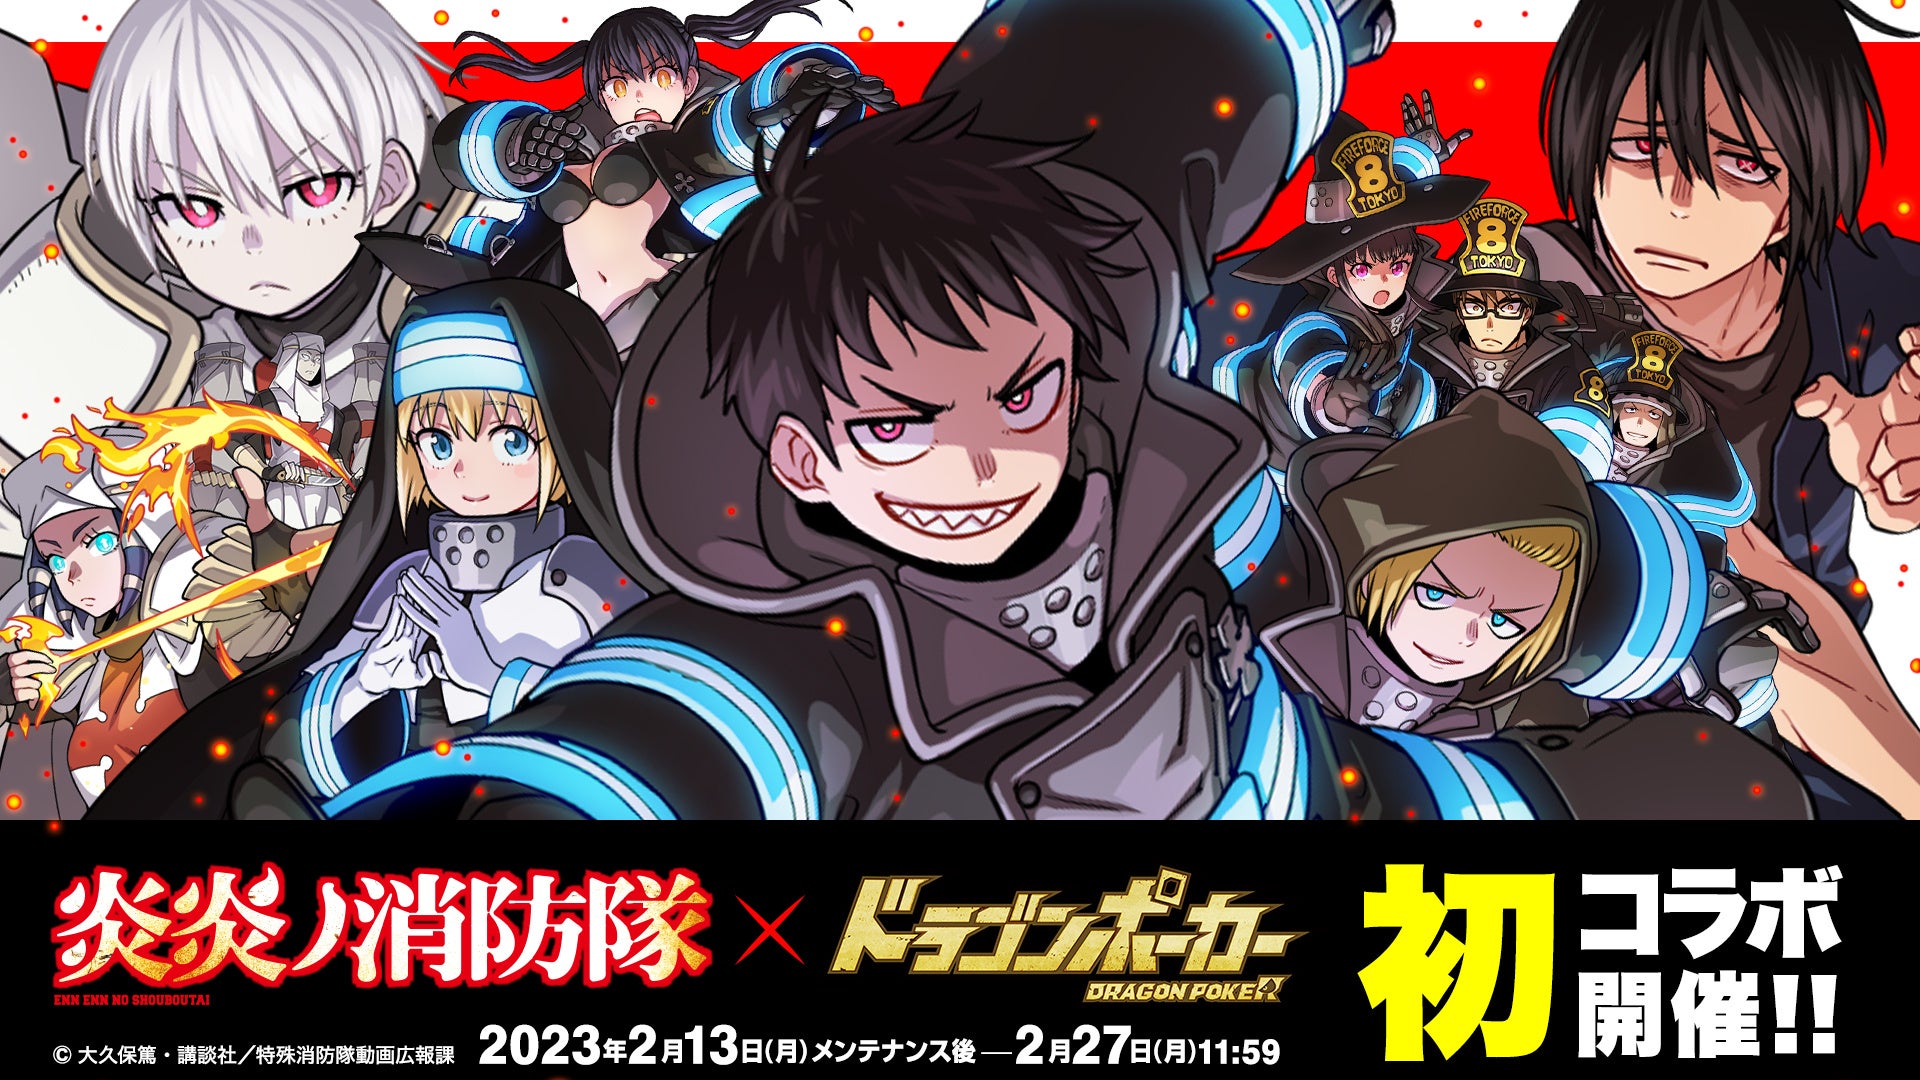 TVアニメ『炎炎ノ消防隊』×『ドラゴンポーカー』2月13日(月)よりコラボ開催！